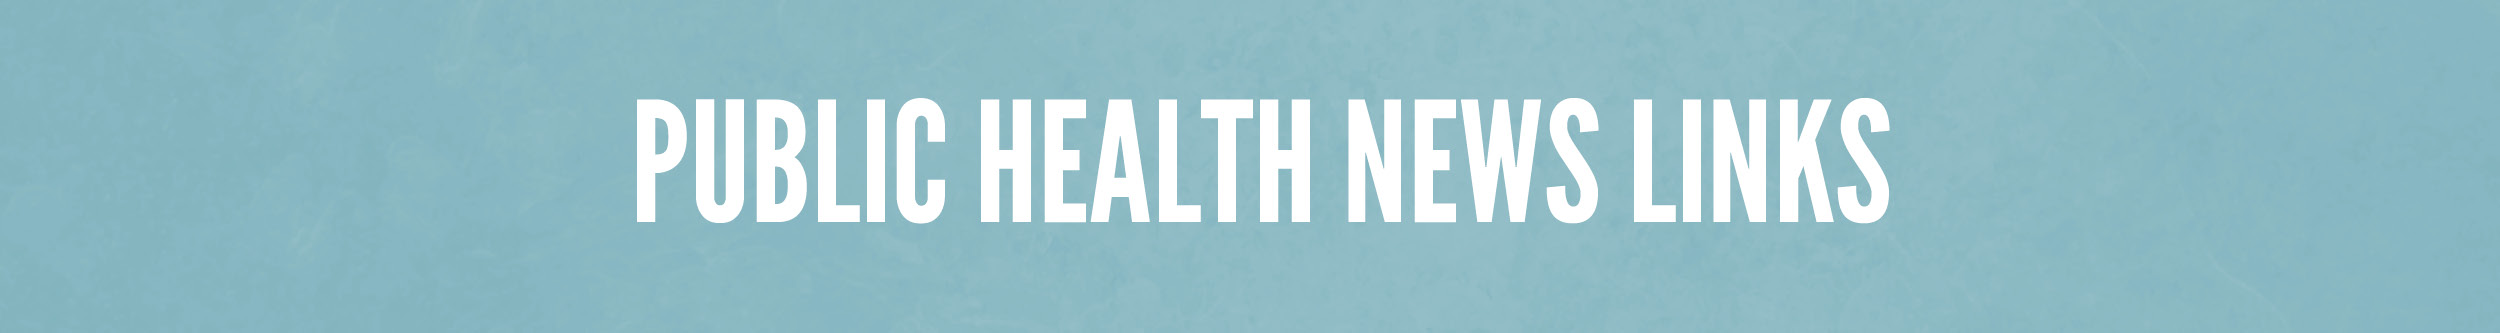 public health news links header